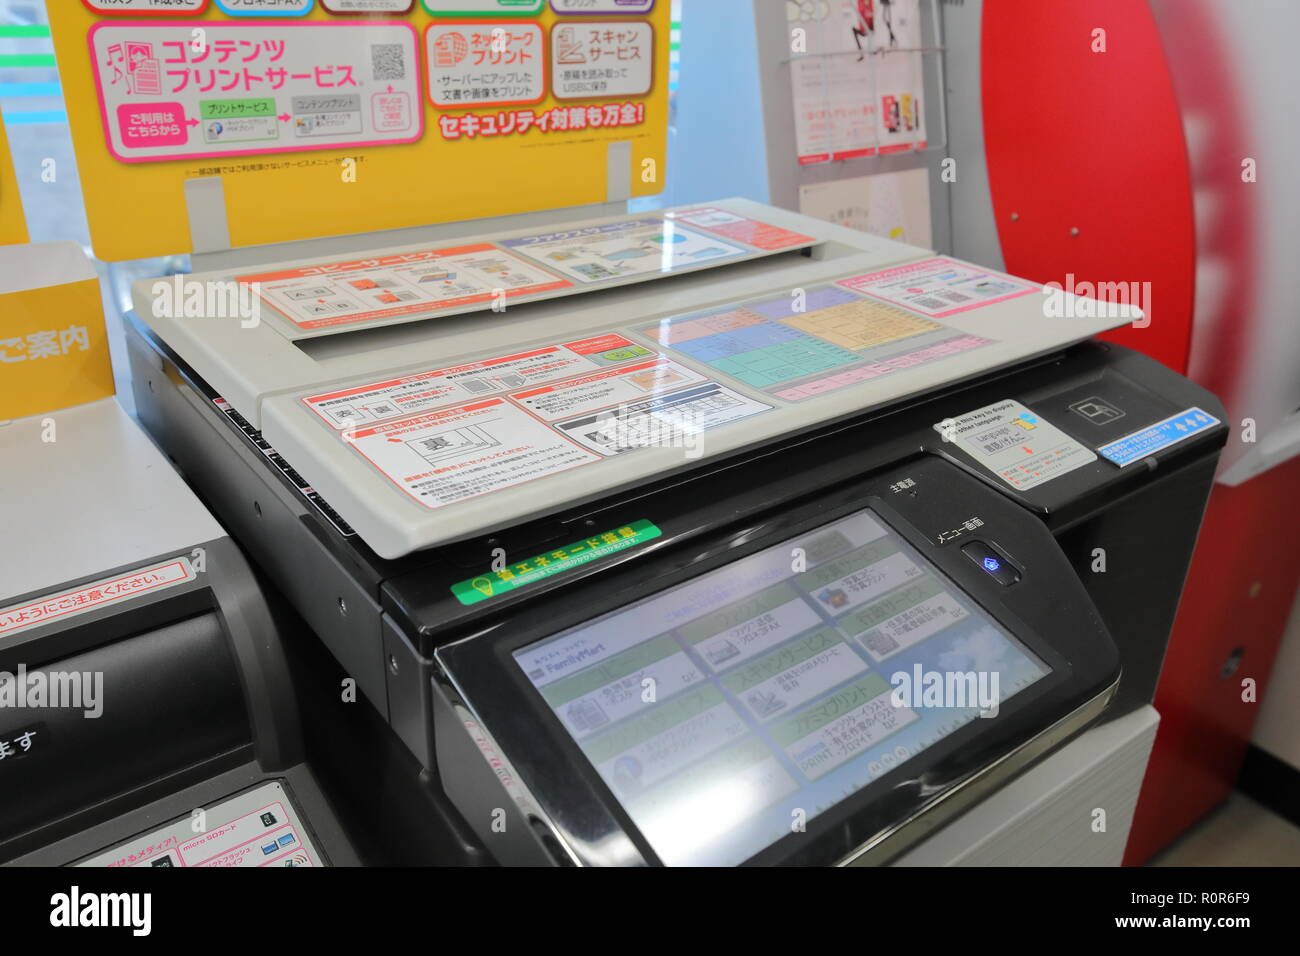 https://c8.alamy.com/comp/R0R6F9/photocopier-service-at-japanese-convenience-store-R0R6F9.jpg